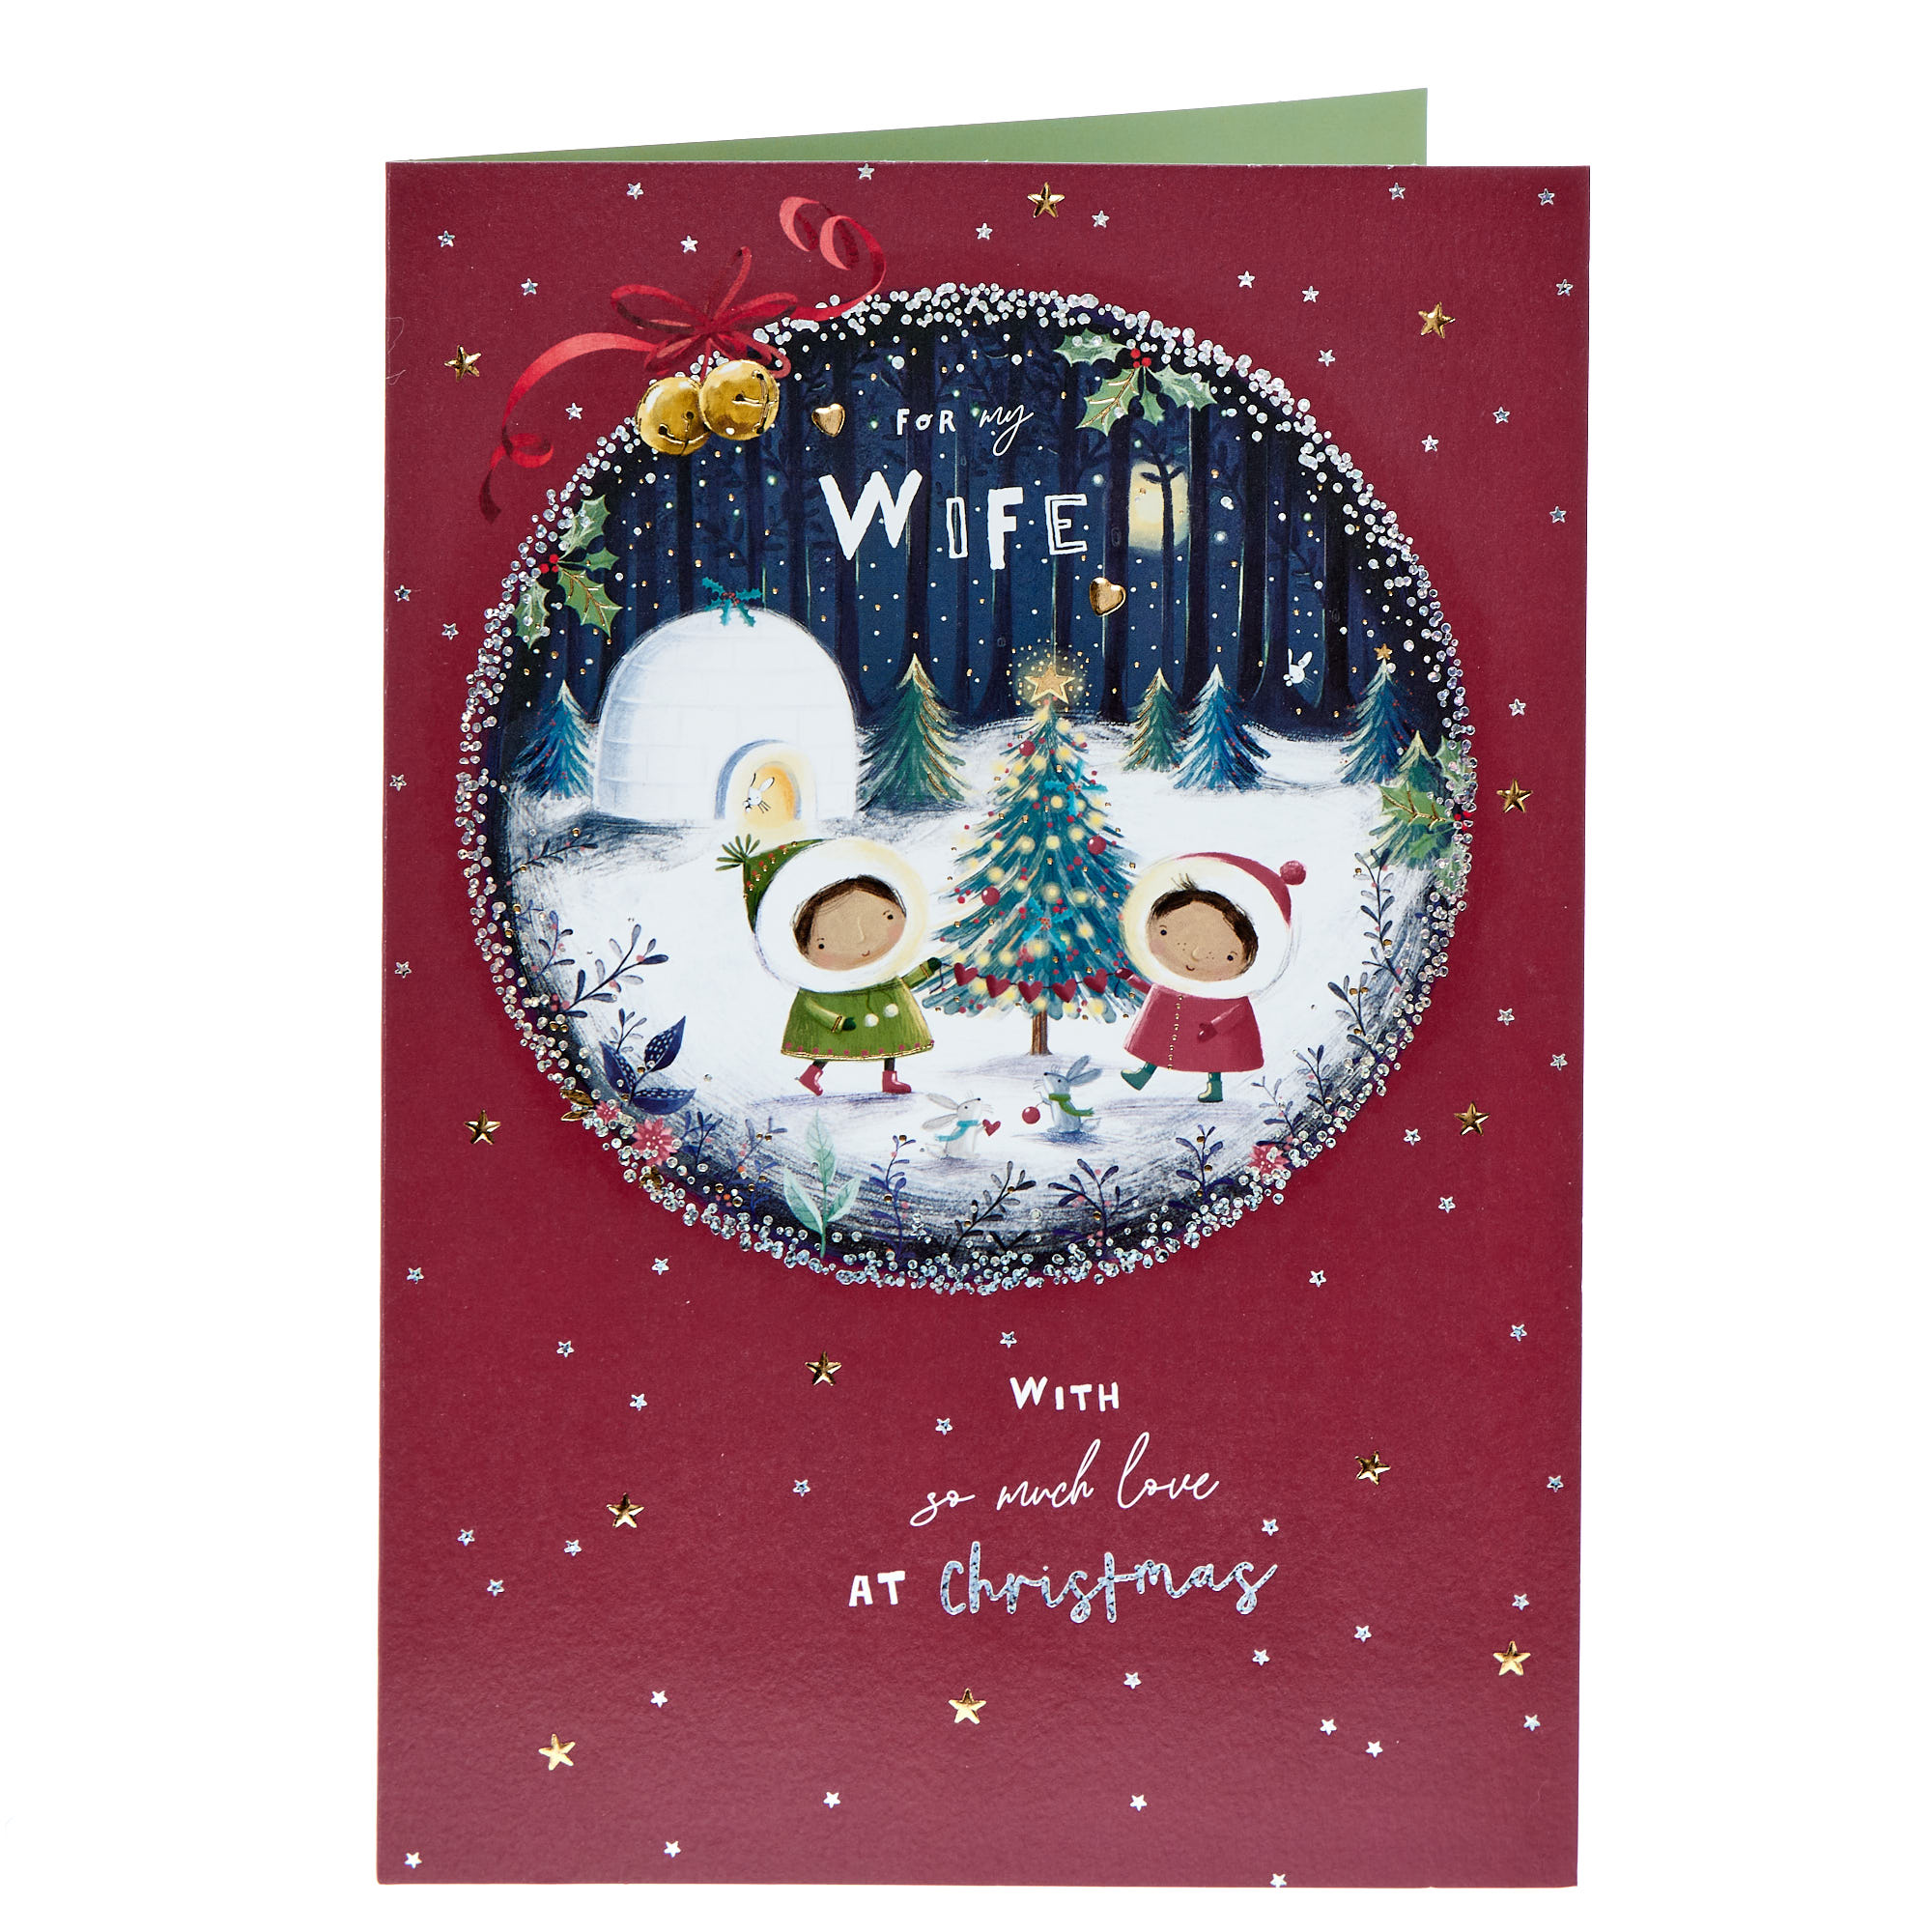 Wife So Much Love Snowglobe Christmas Card